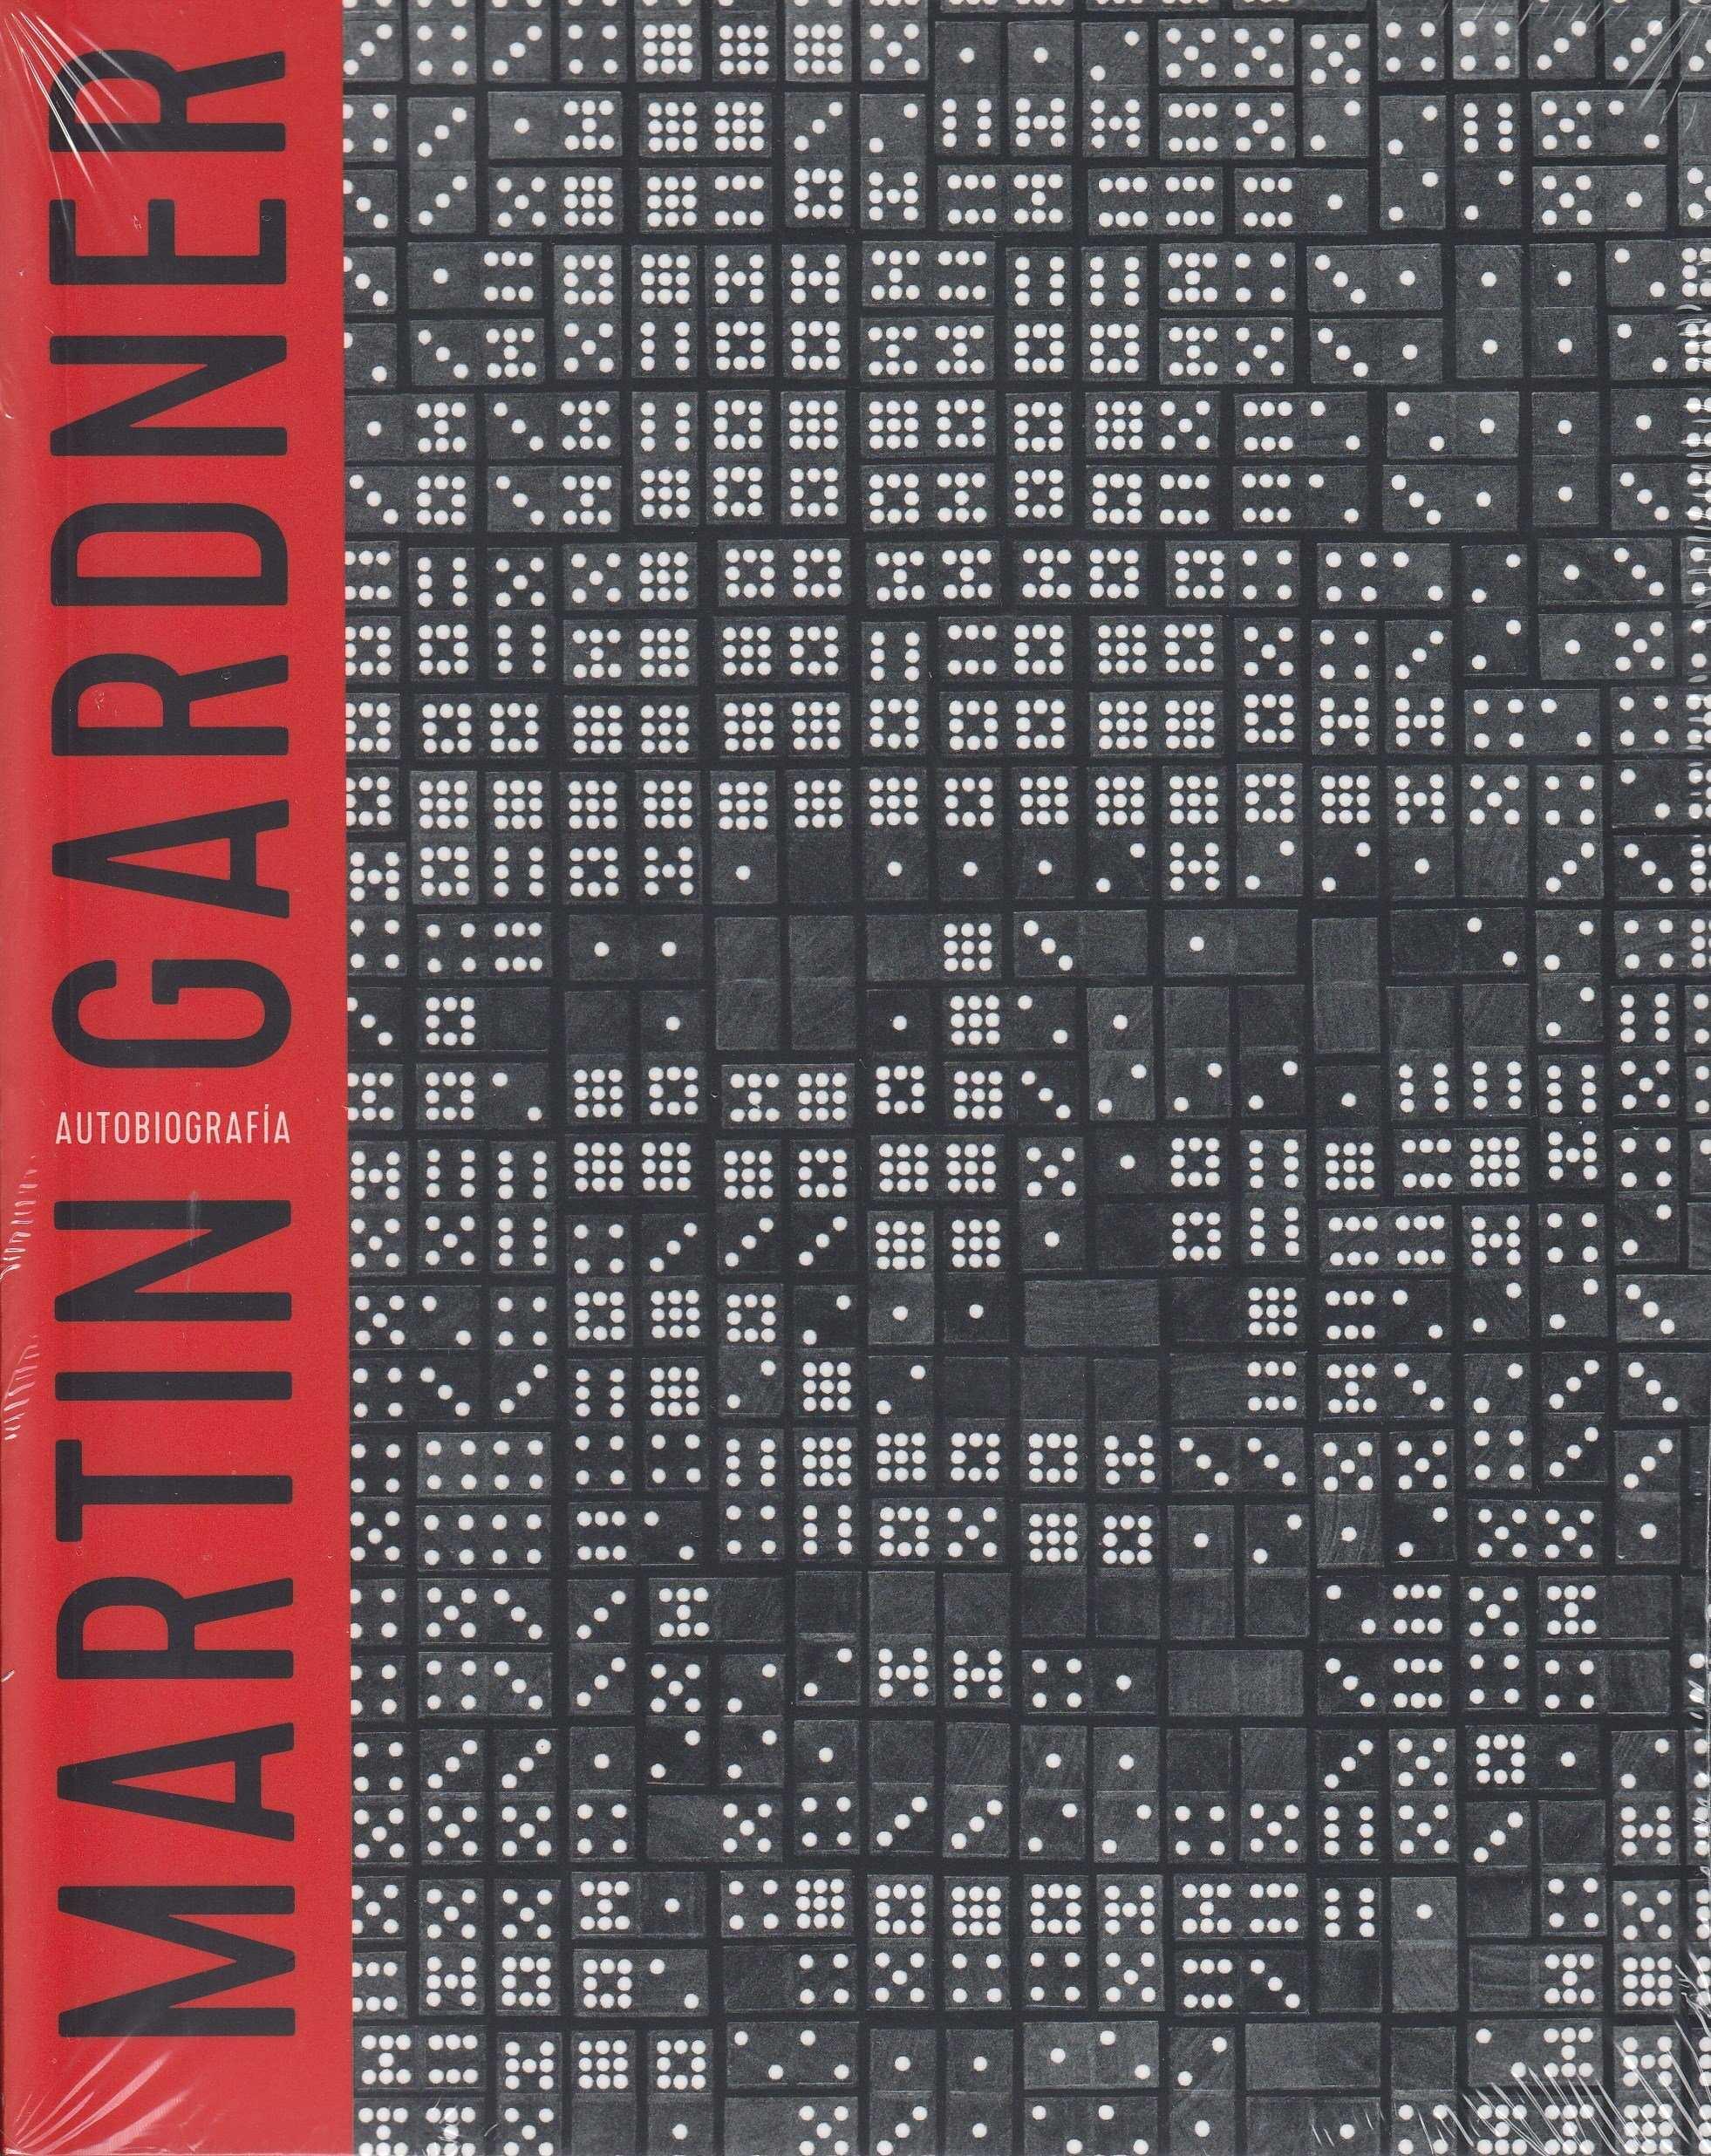 Puro Abracadabra "Autobiografía de Martin Gardner". 